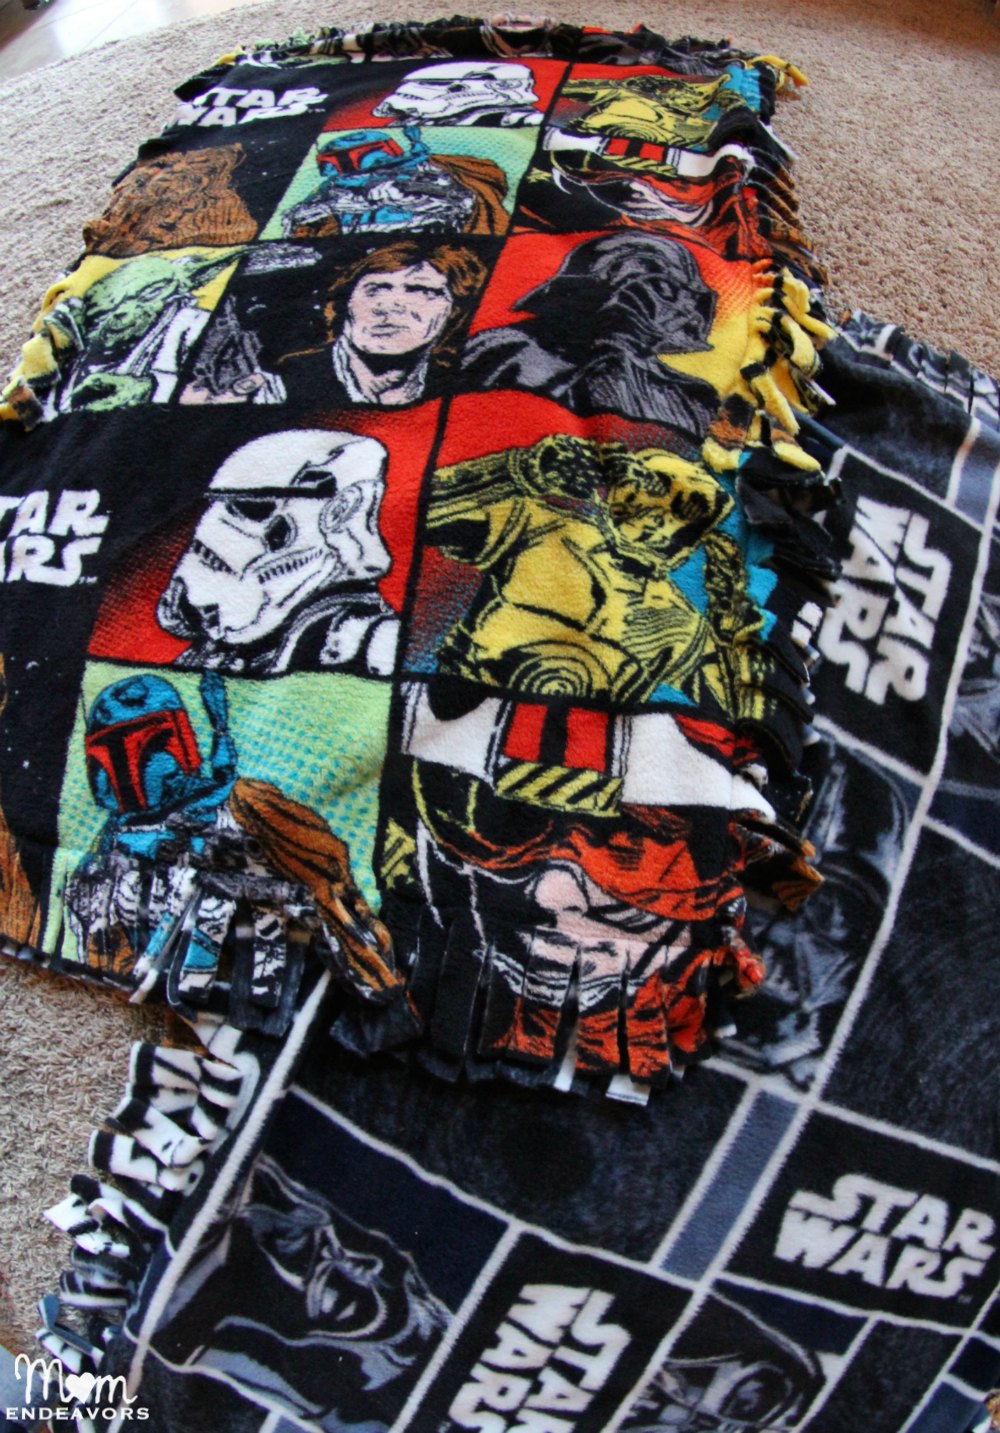 Star Wars Blanket